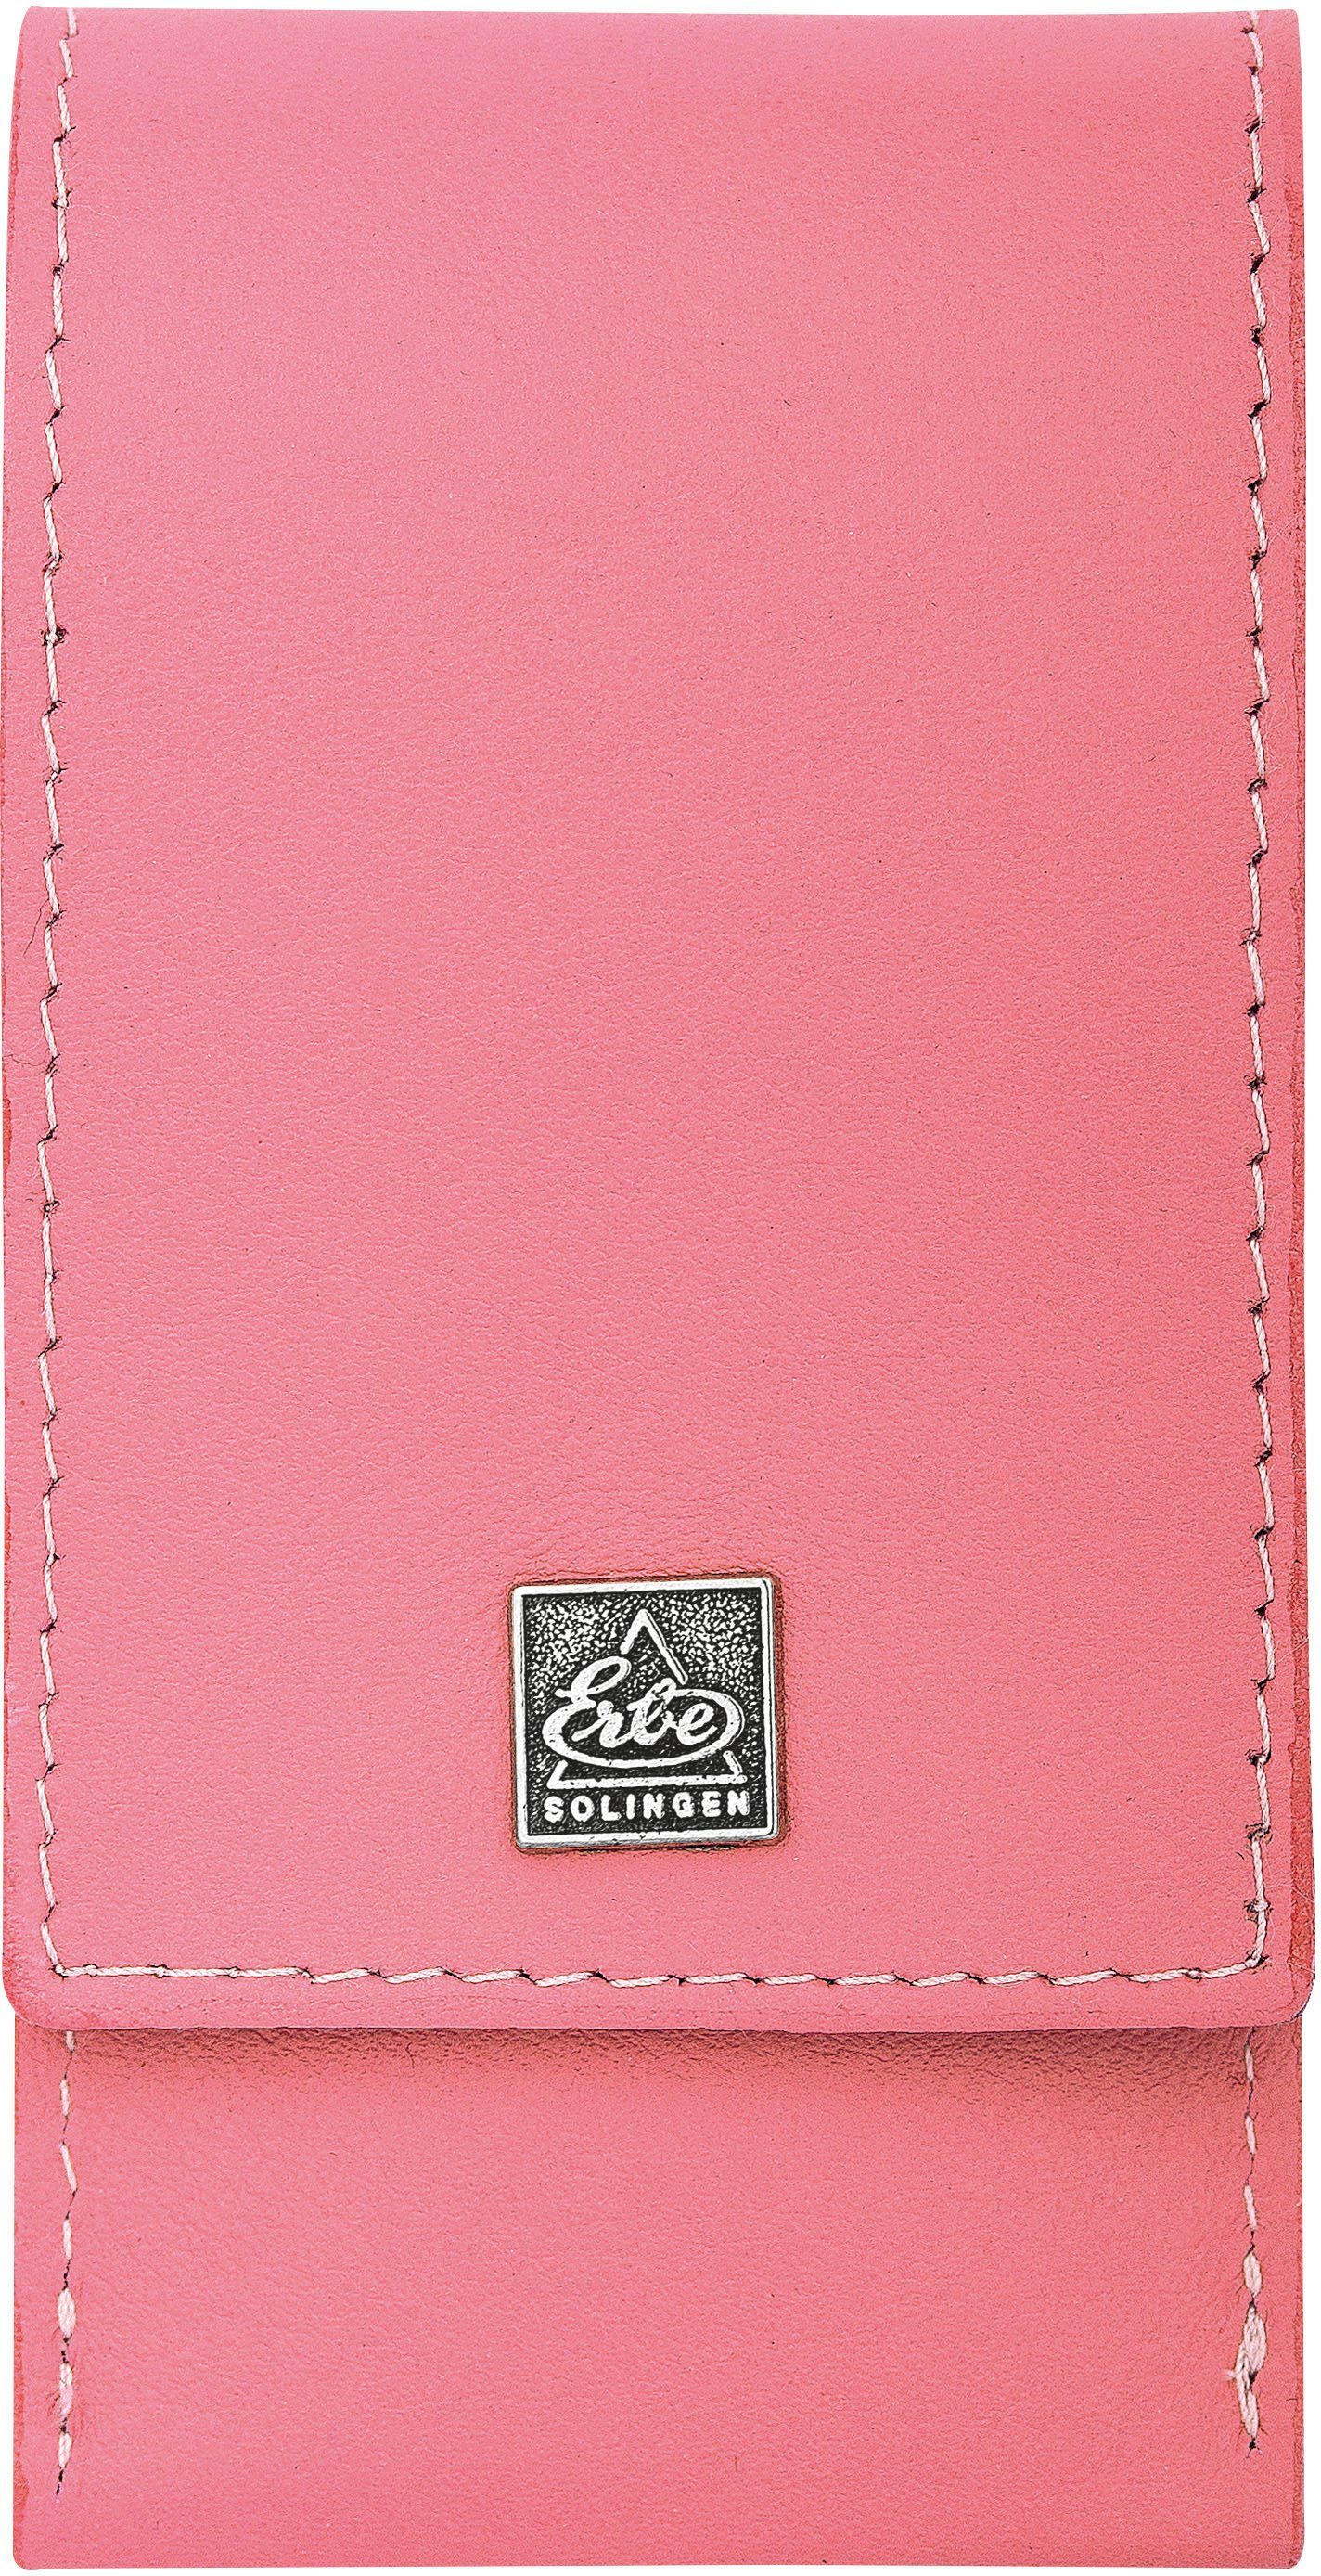 ERBE Maniküre-Etui ERBE Maniküre Set pink, 3 3-tlg., "Colour", tlg. Serie Taschen-Etui